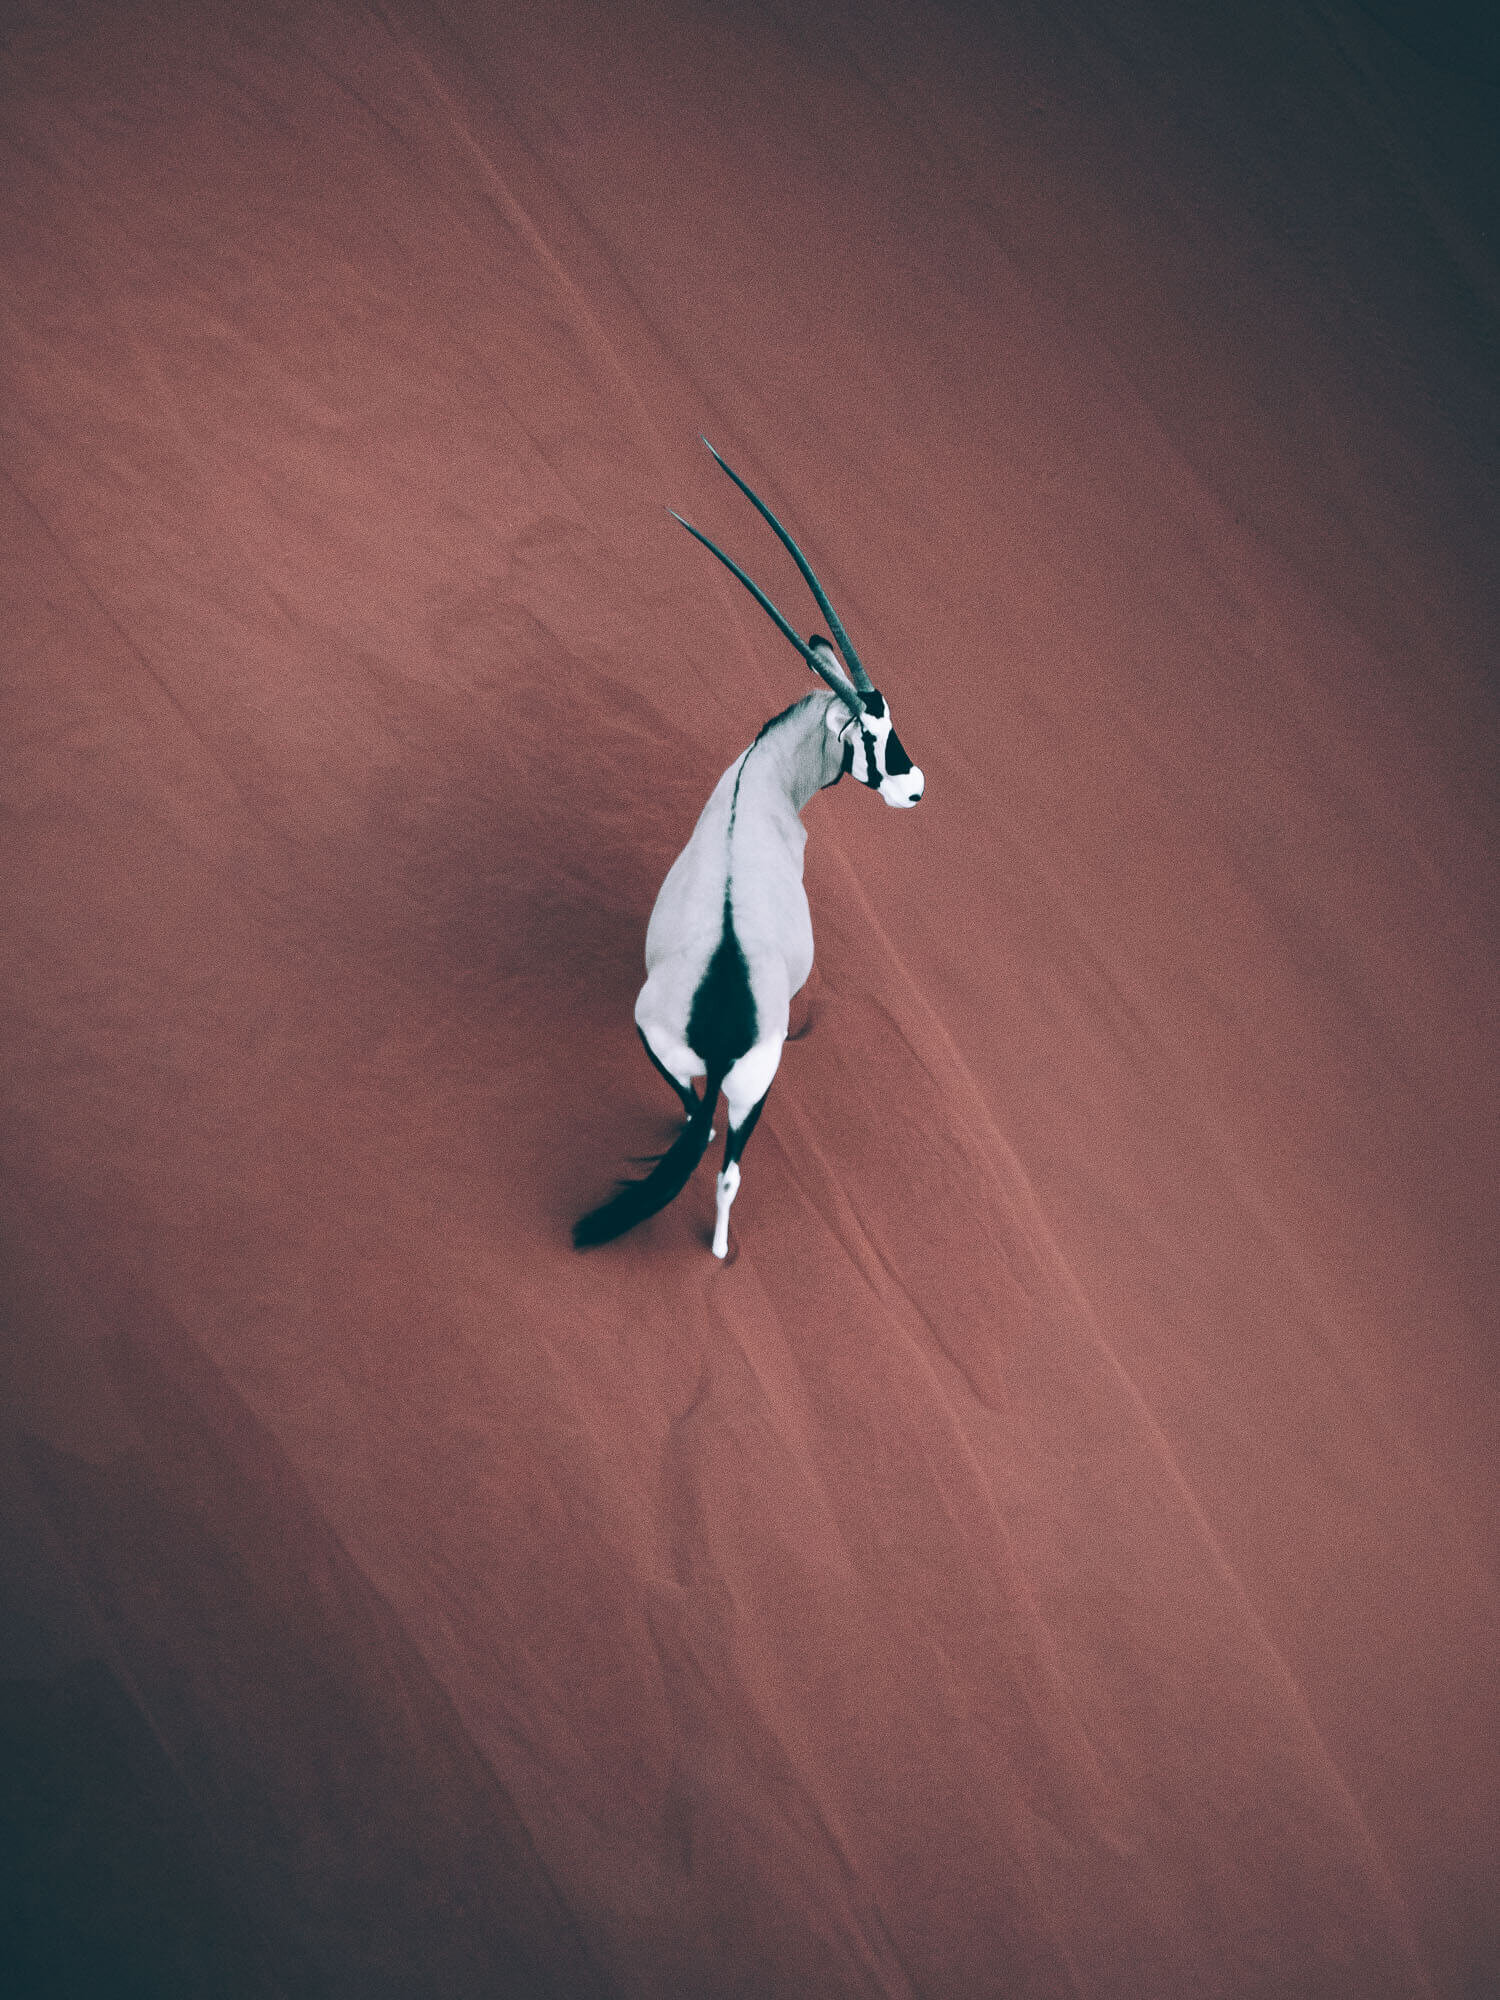 Oryx Namibia Aerial Photography.jpg